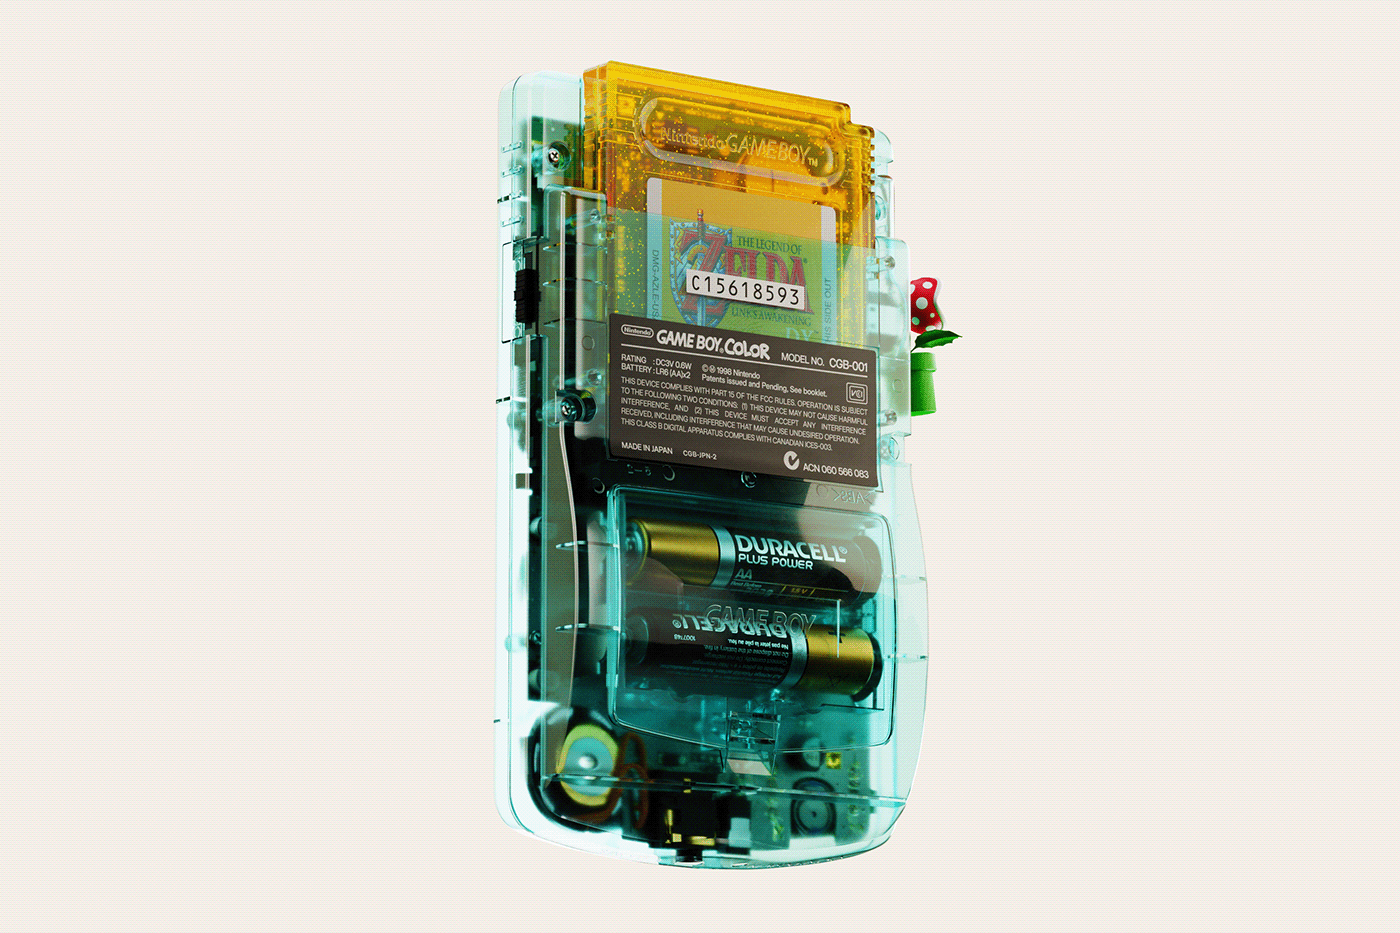 Nintendo Gameboy Colour in Blender 